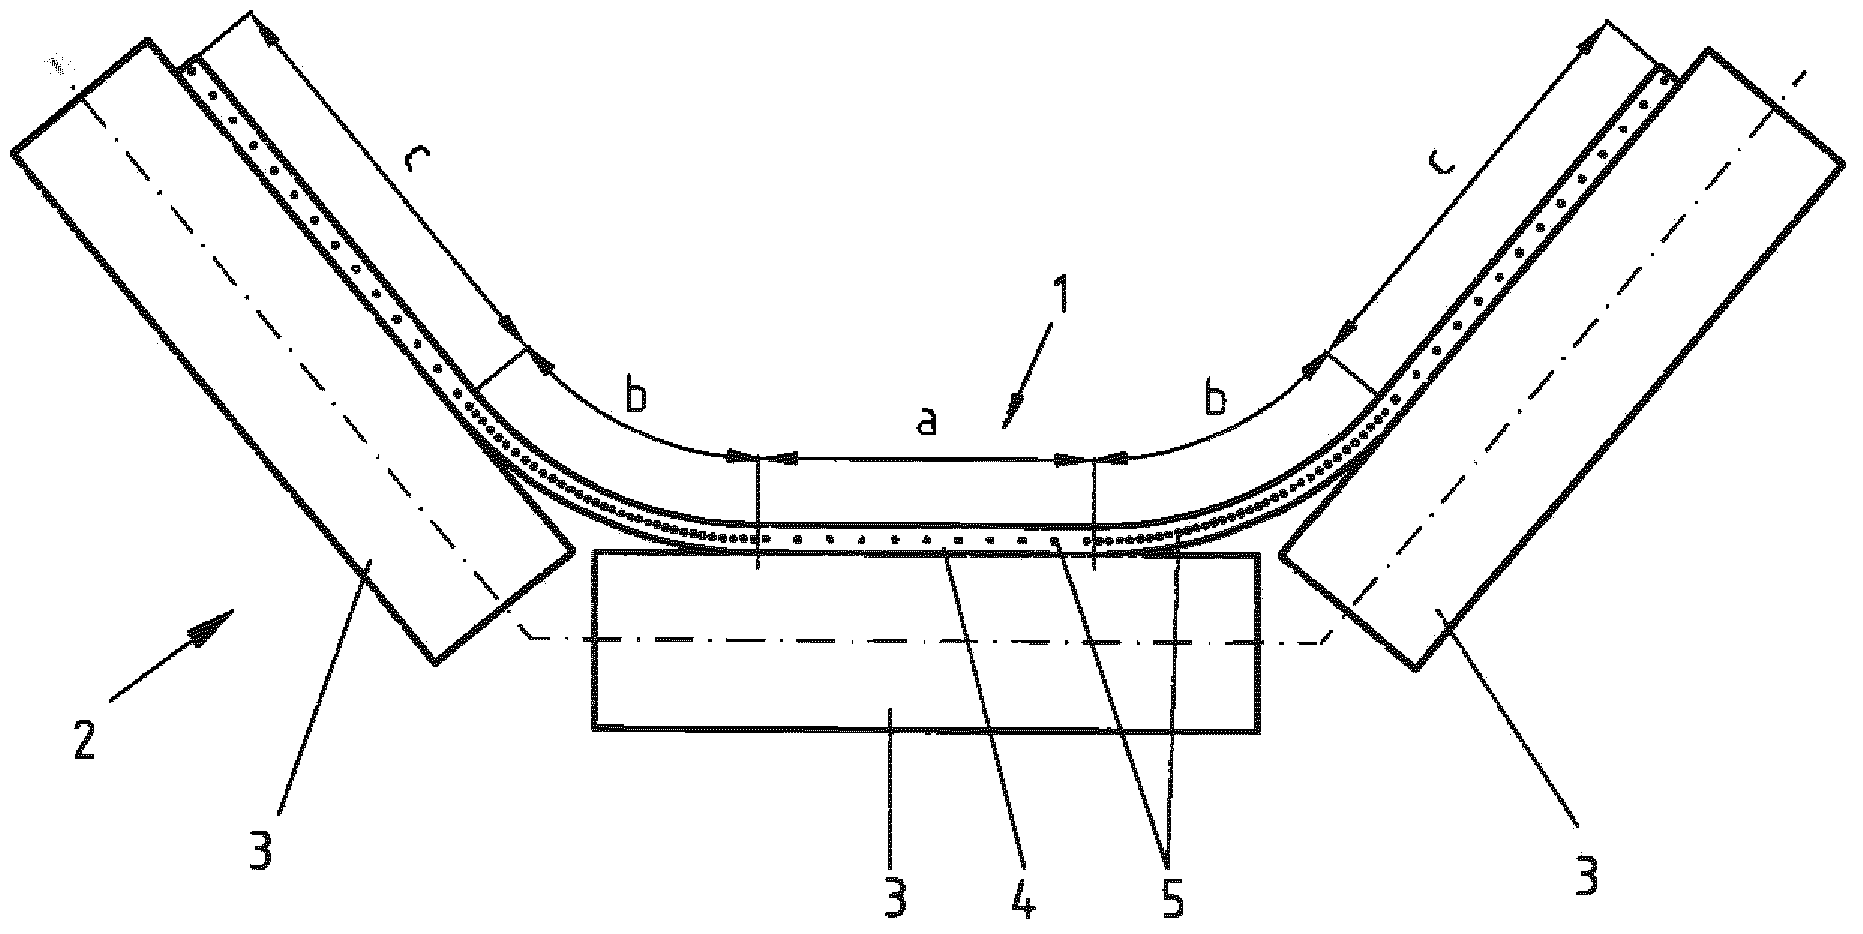 Conveyor belt system and conveyor belt